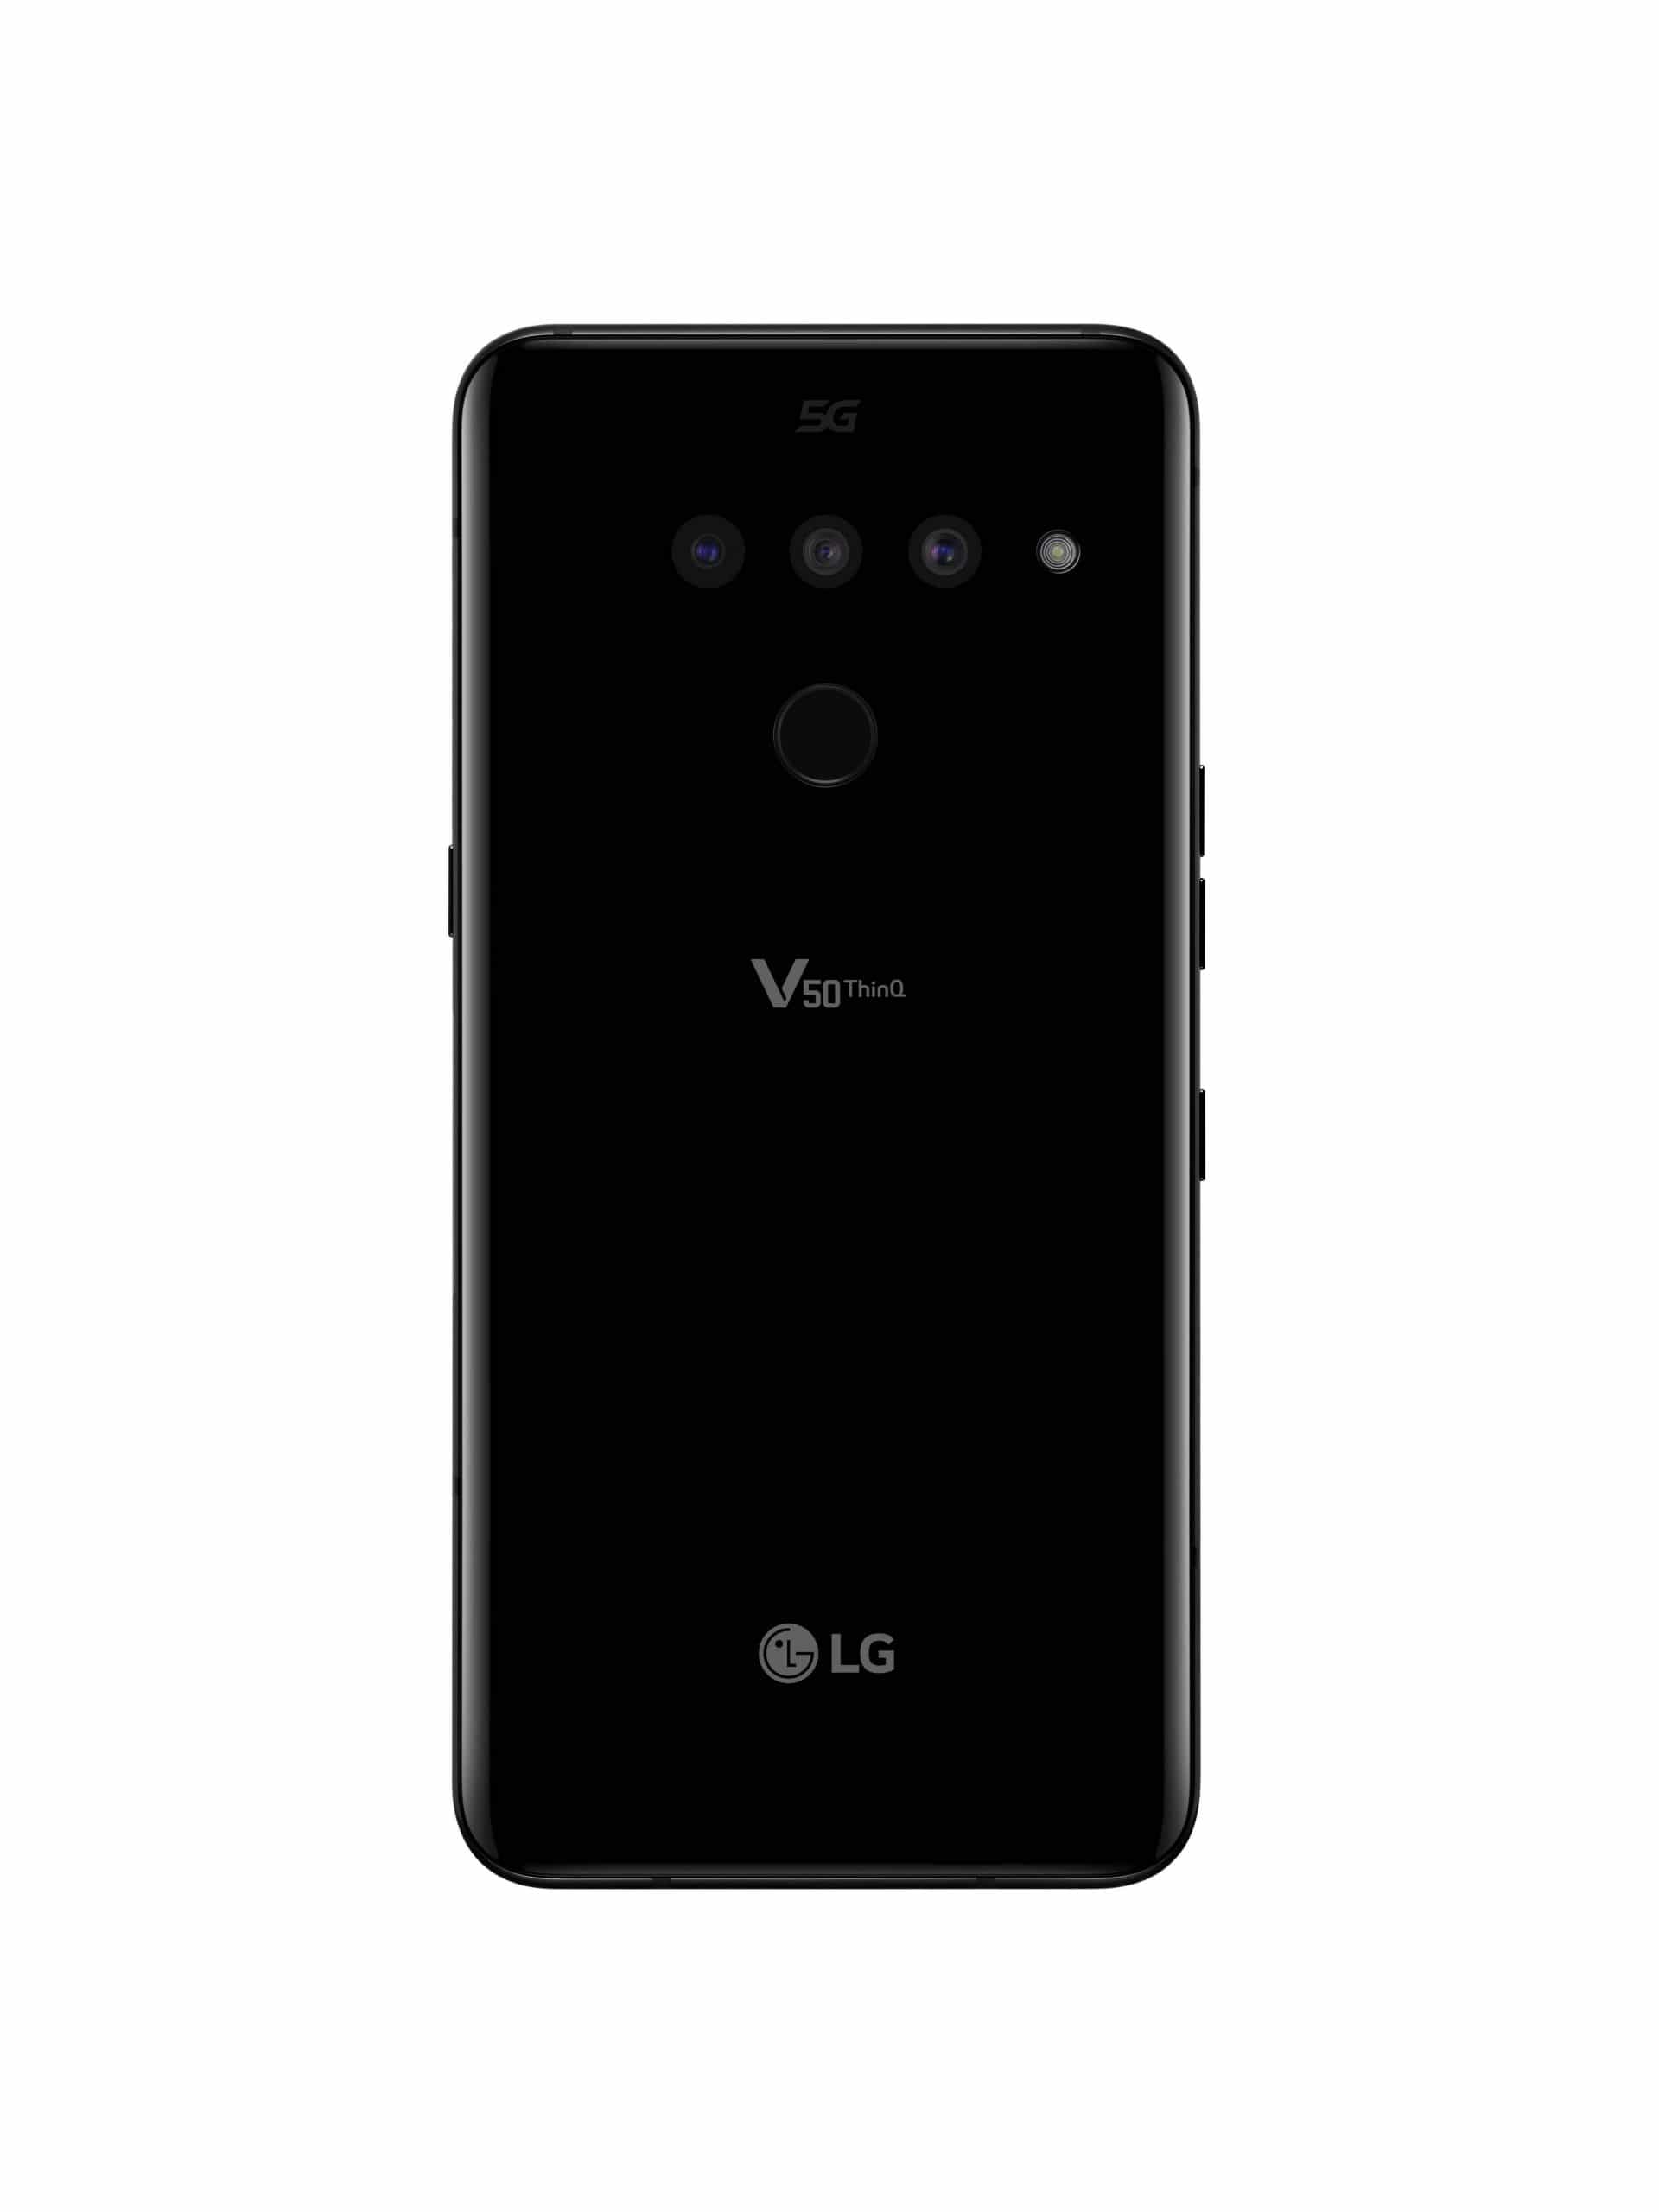 LG V50 ThinQ Back e1551196047746